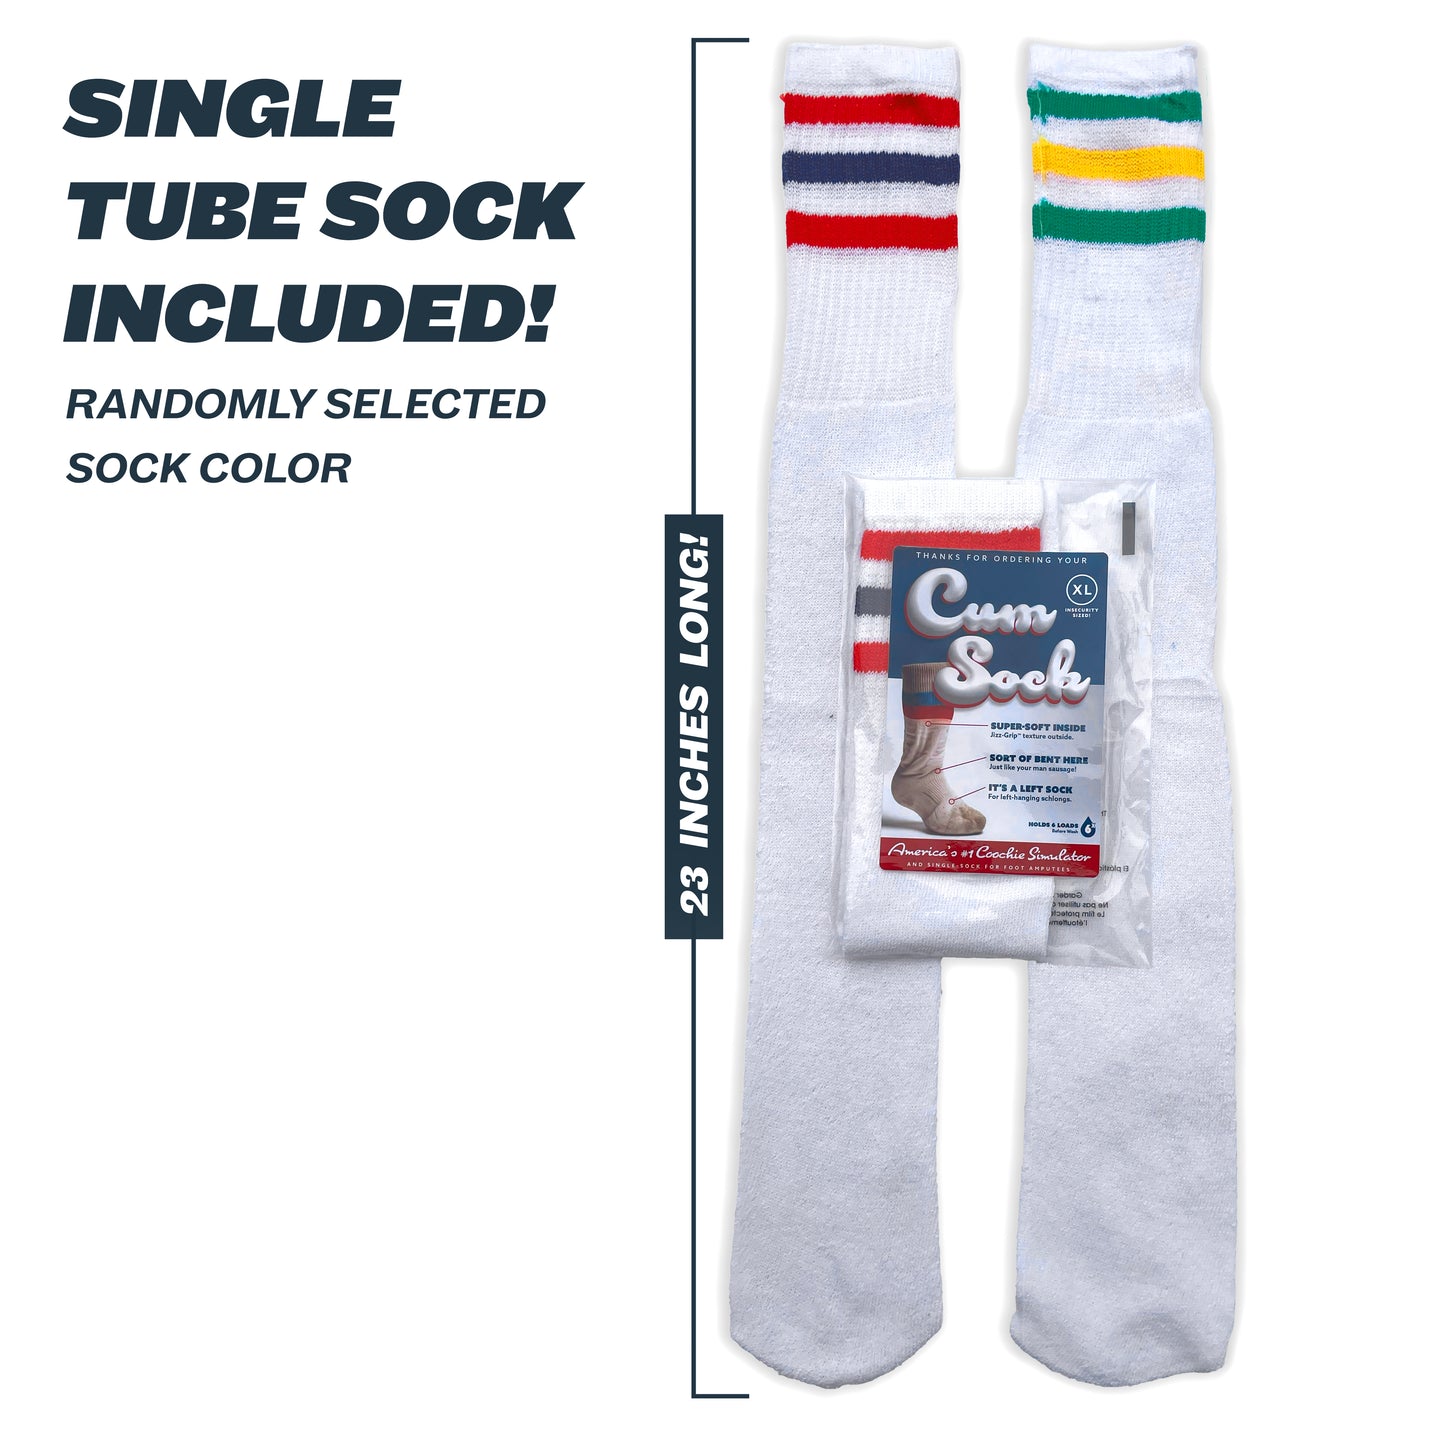 Single tube sock included! Randomly selected sock color. Extra large 23 inch long tube sock inside.